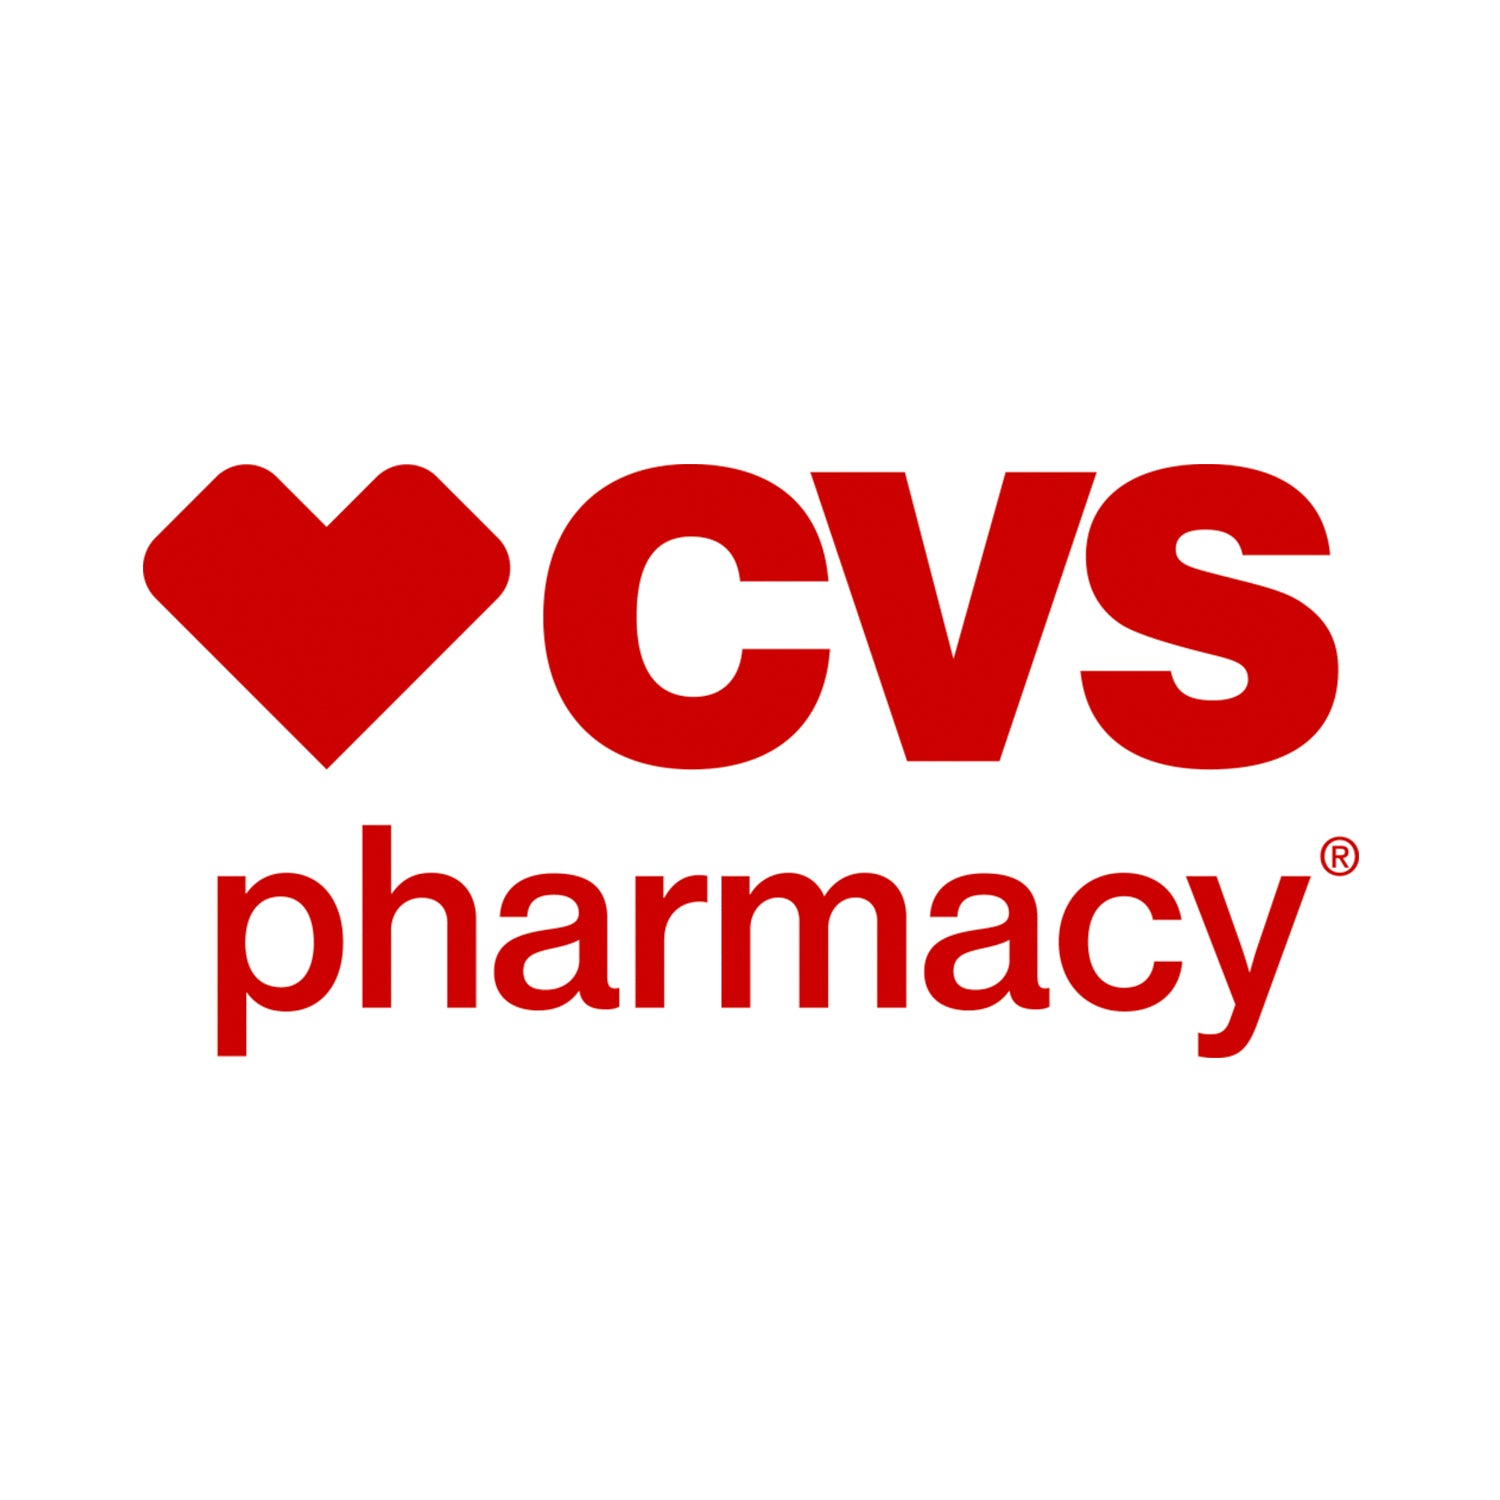 Cvs com. CVS Pharmacy. Логотип CV. Pharmacy логотип. CV USA.